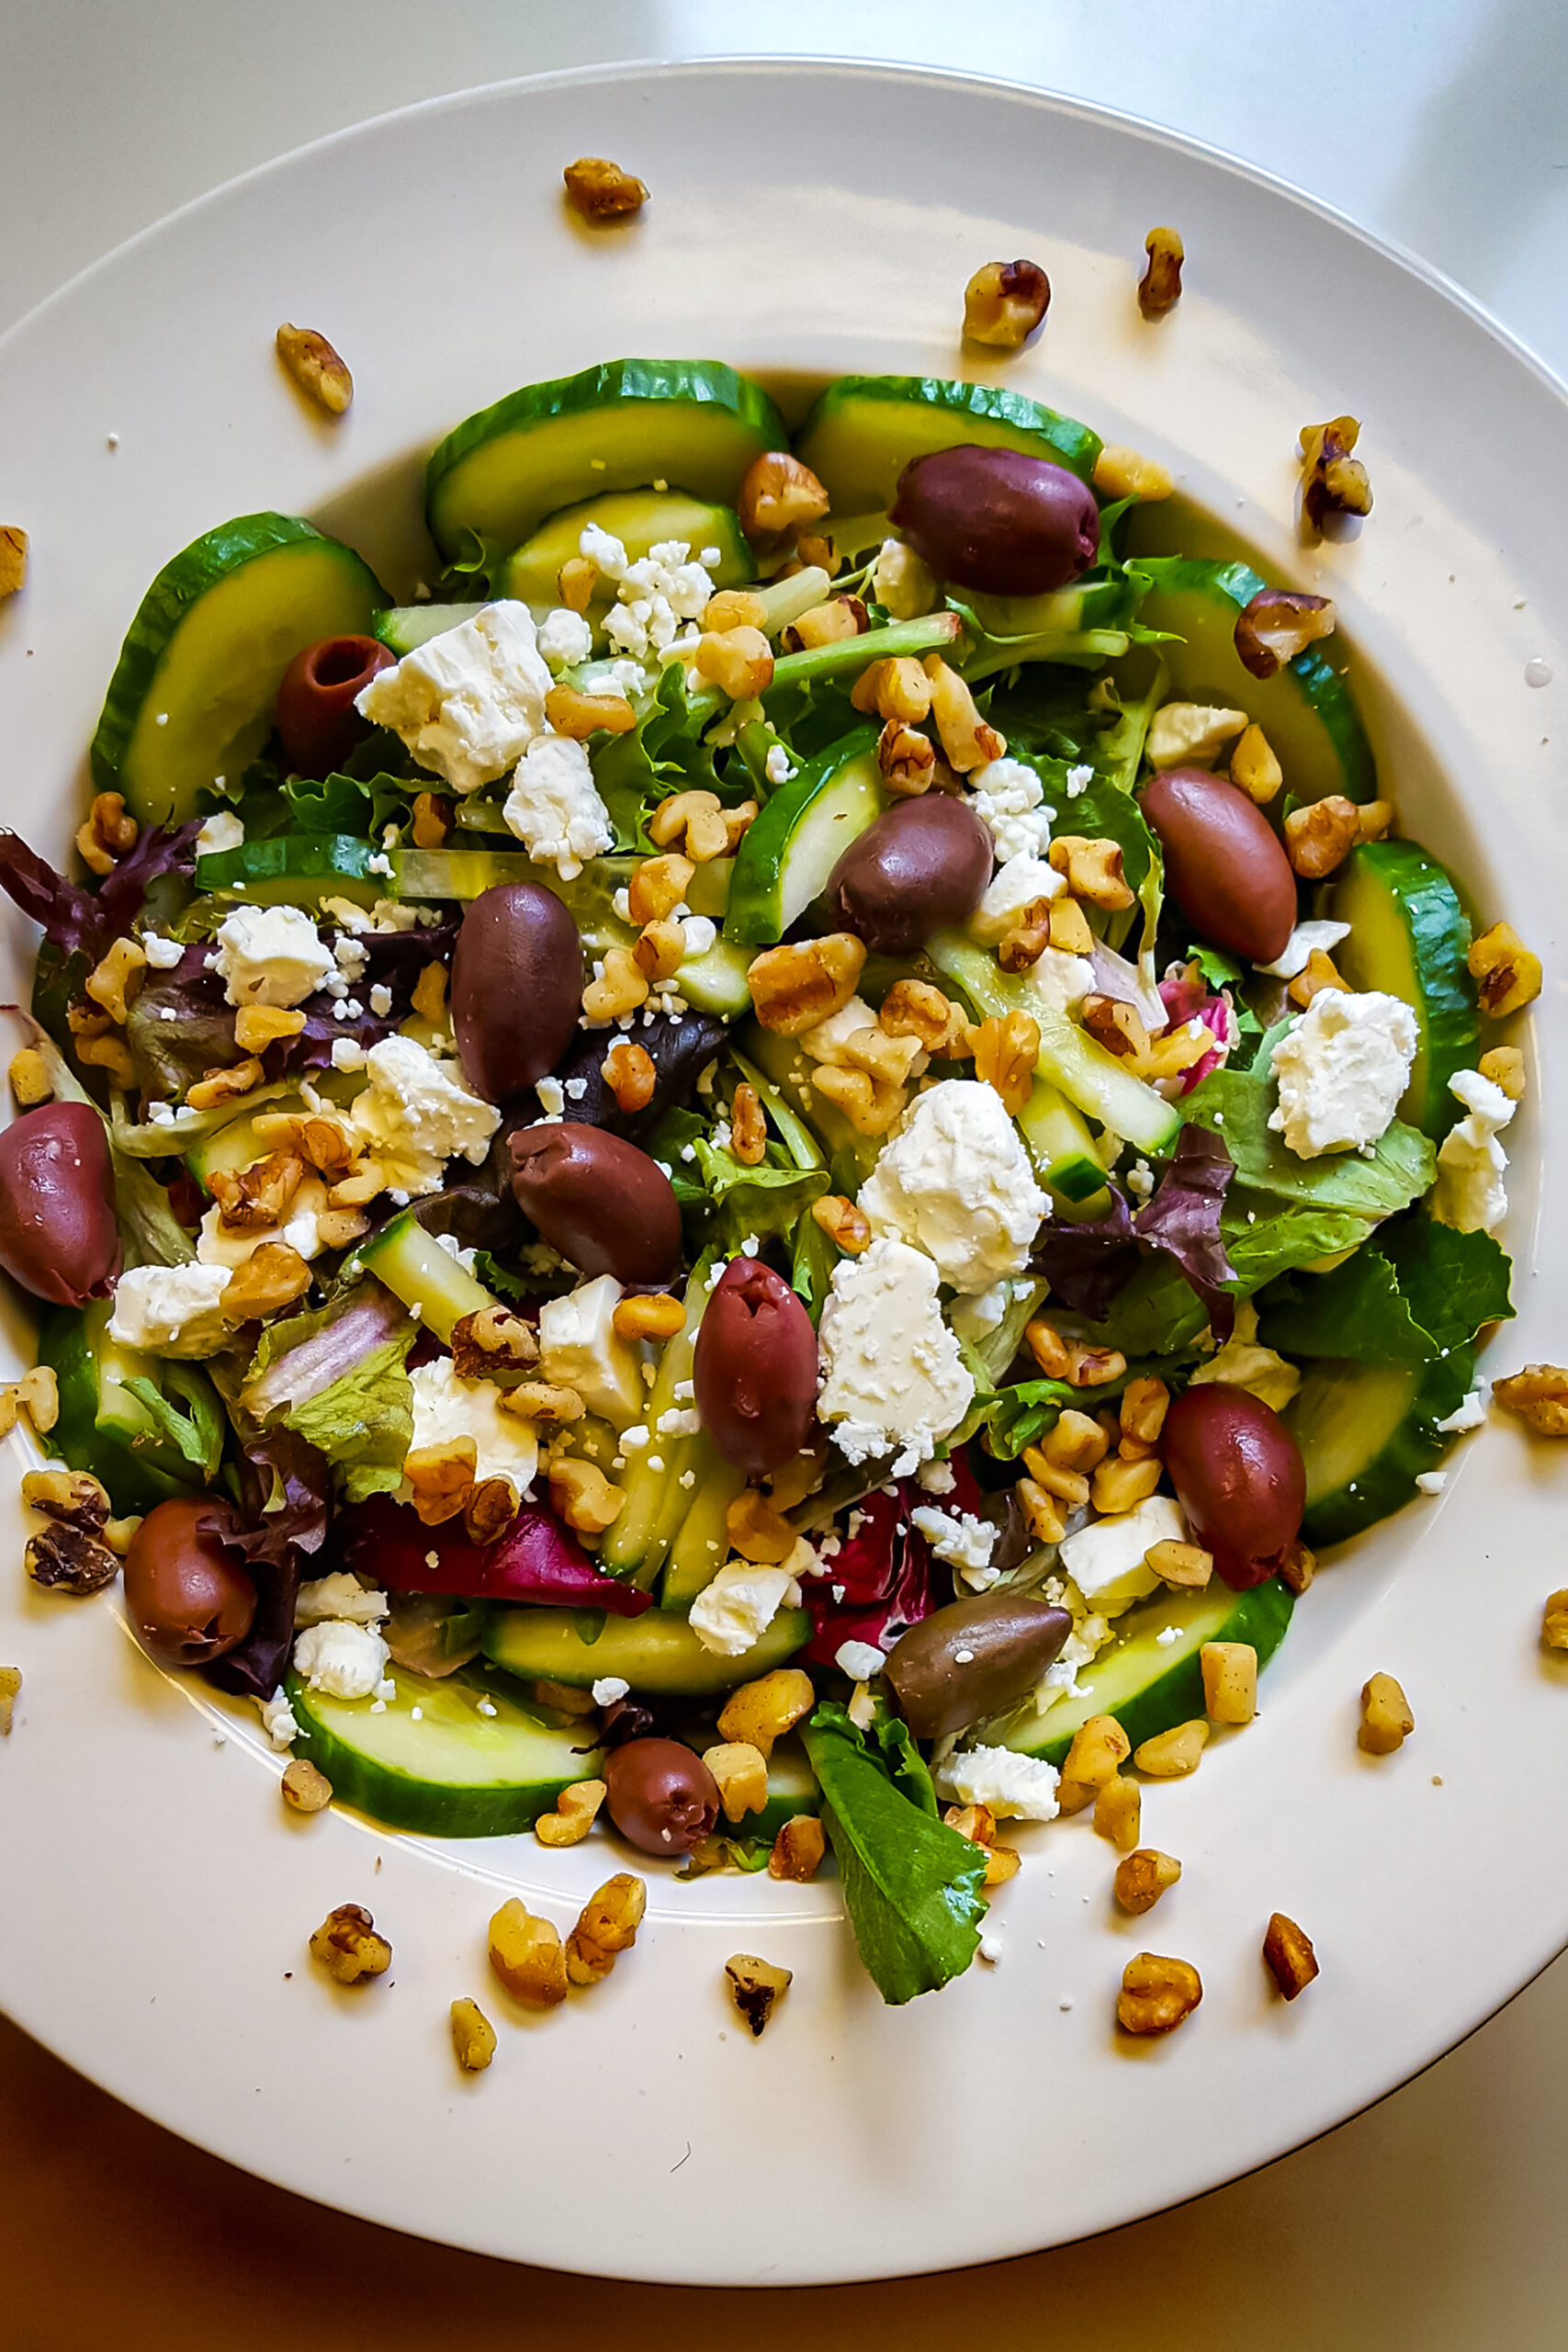 Walnut, Feta Black Olive Salad with Mixed Greens Pic #2 edit